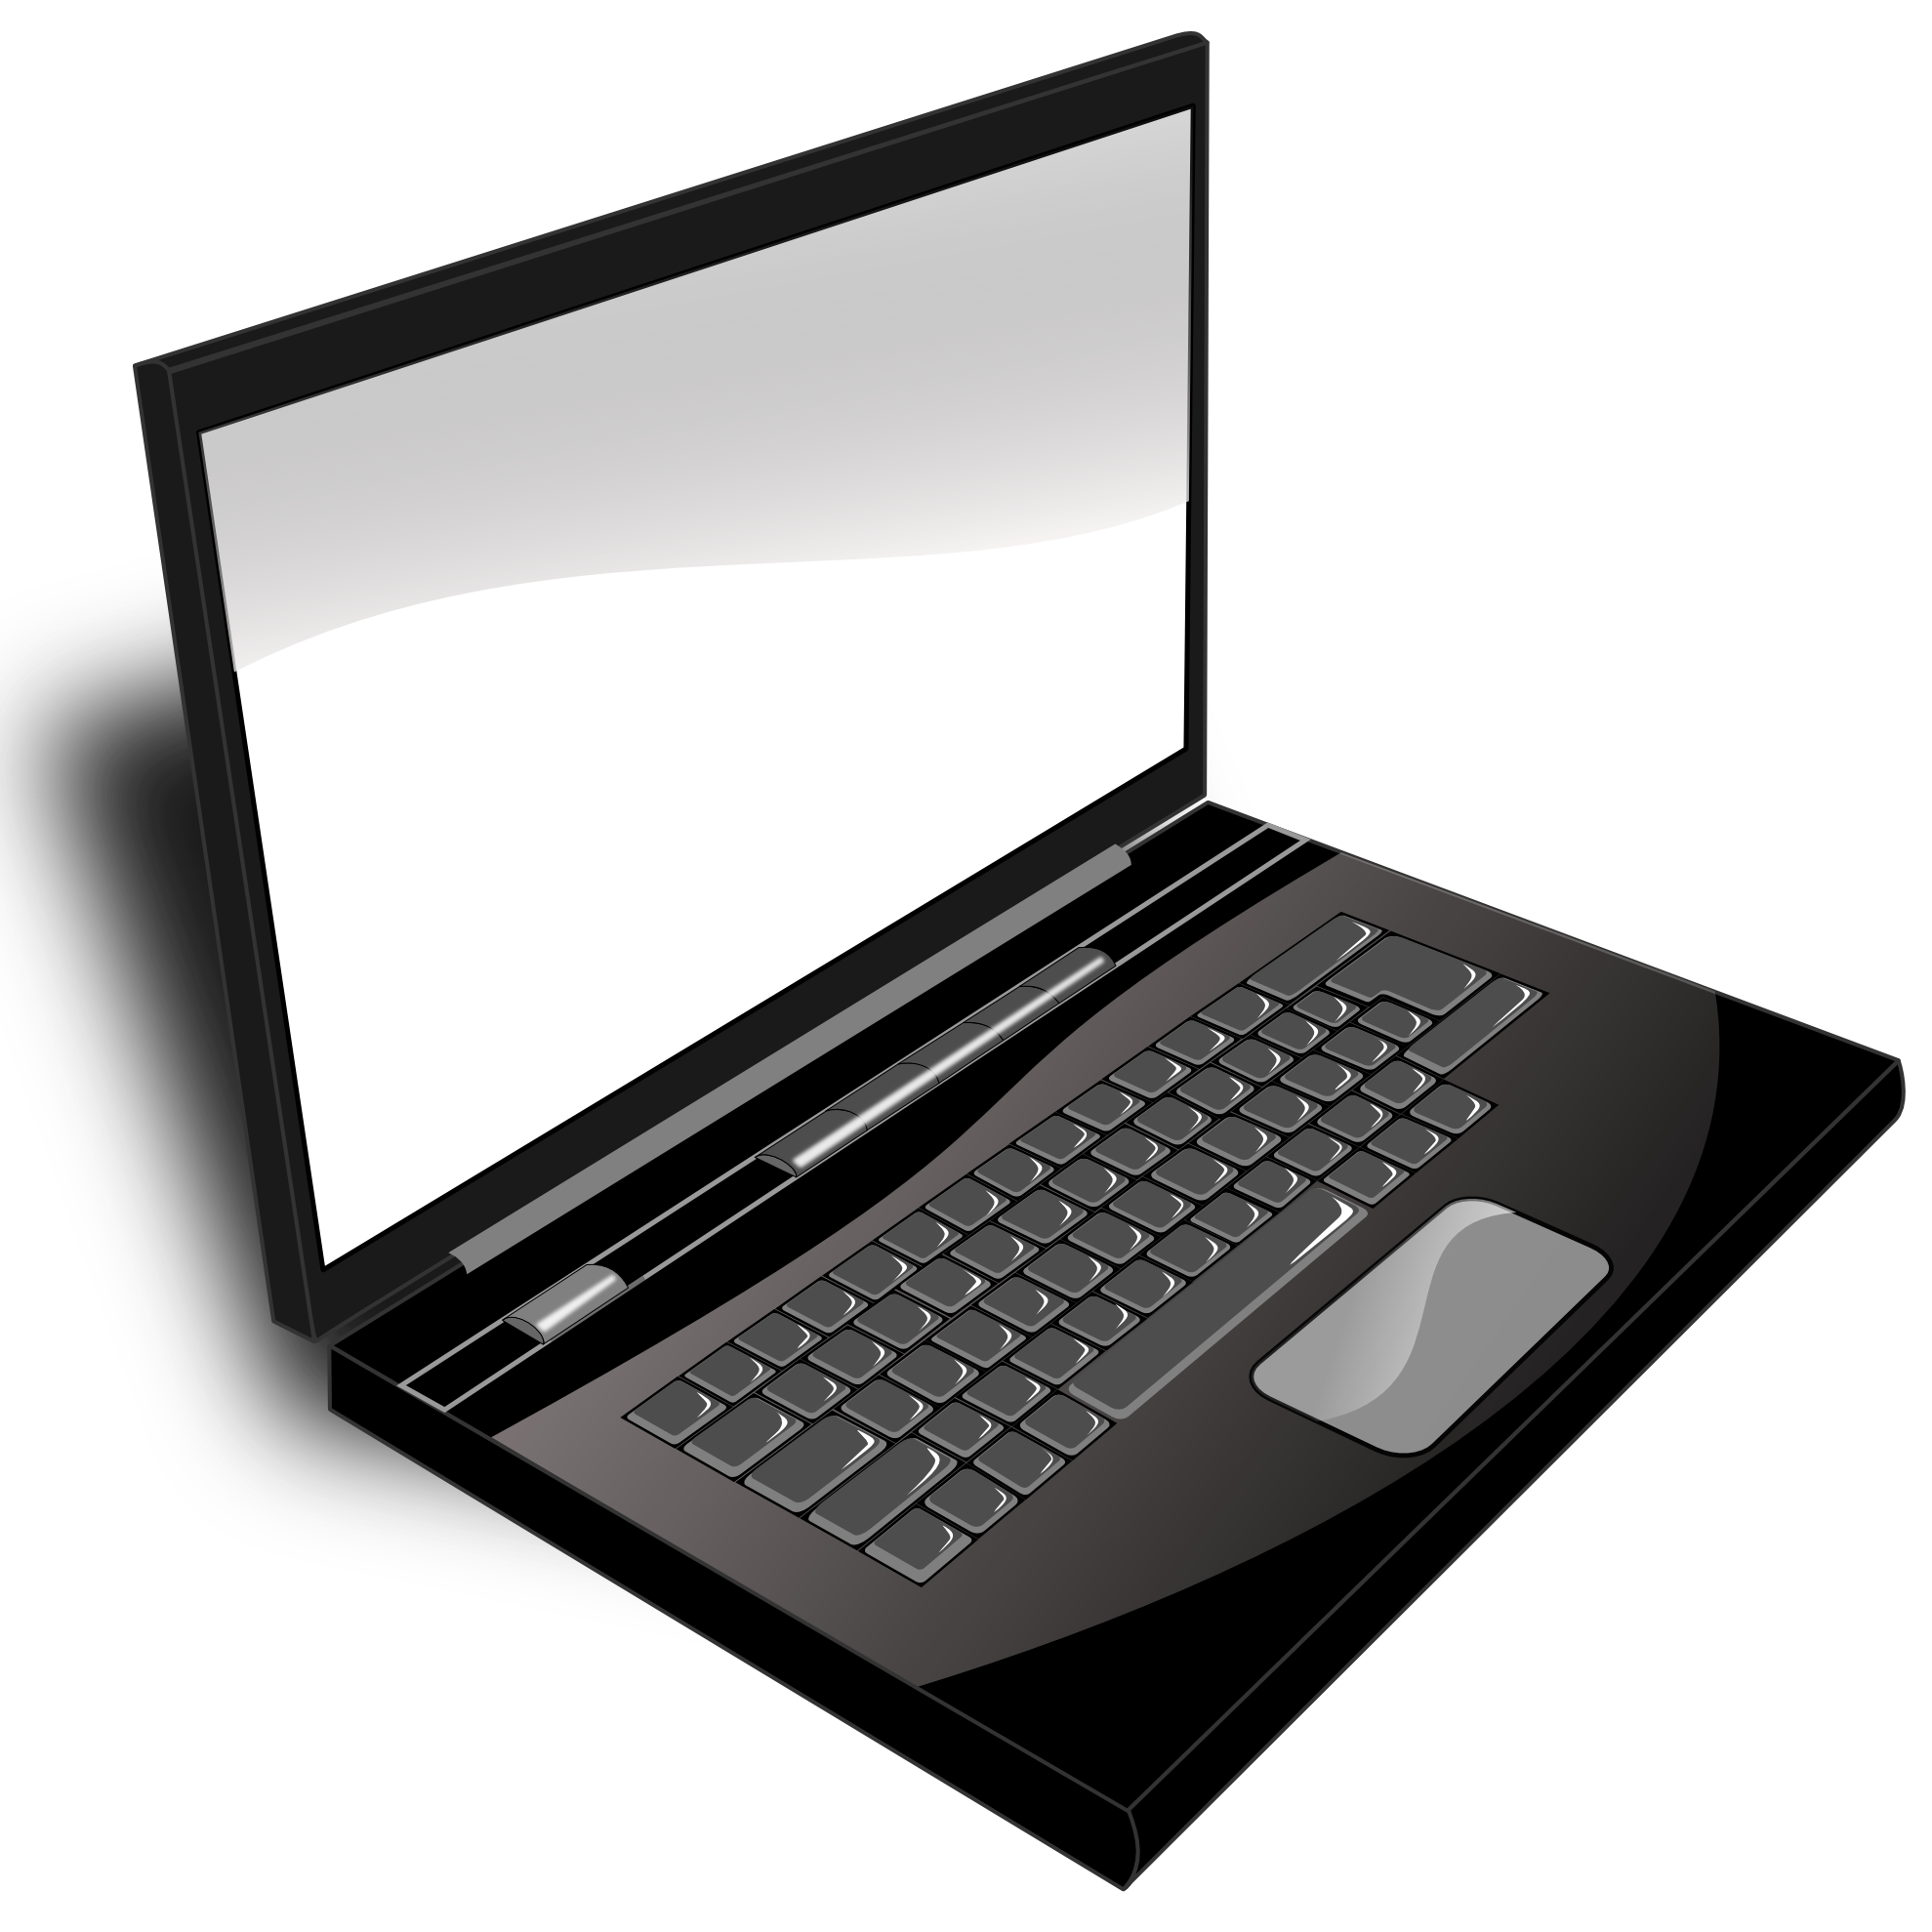 Laptop Clip Art Black And White   Clipart Panda   Free Clipart Images